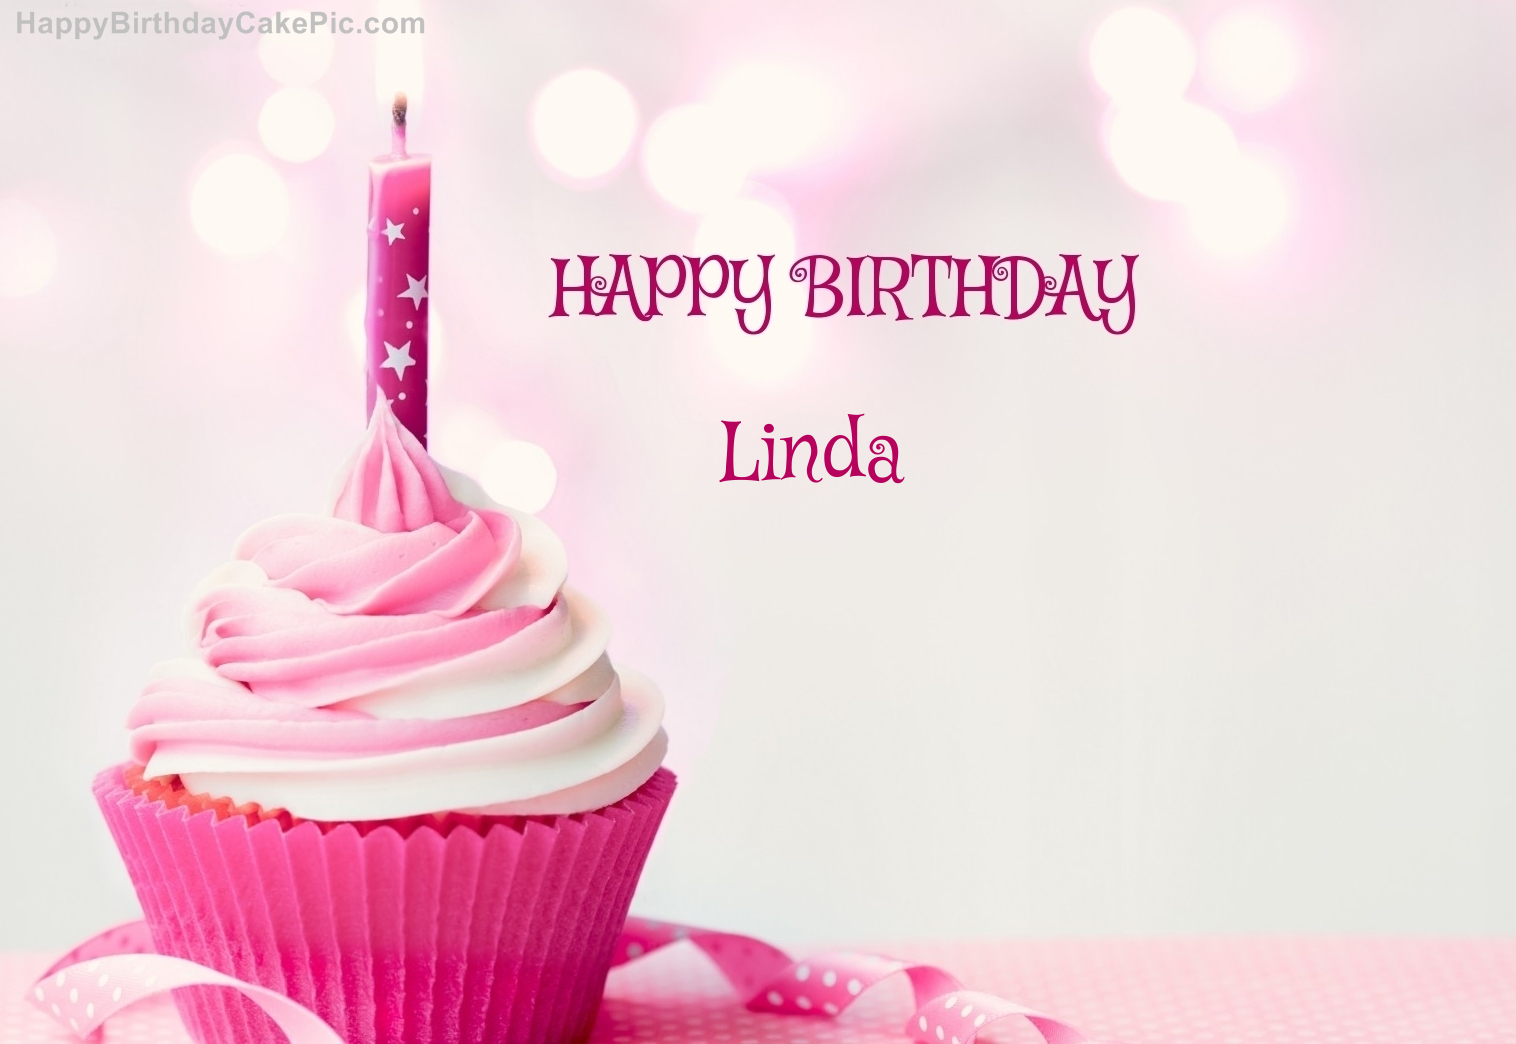 Image result for birthday cupcake linda i,age